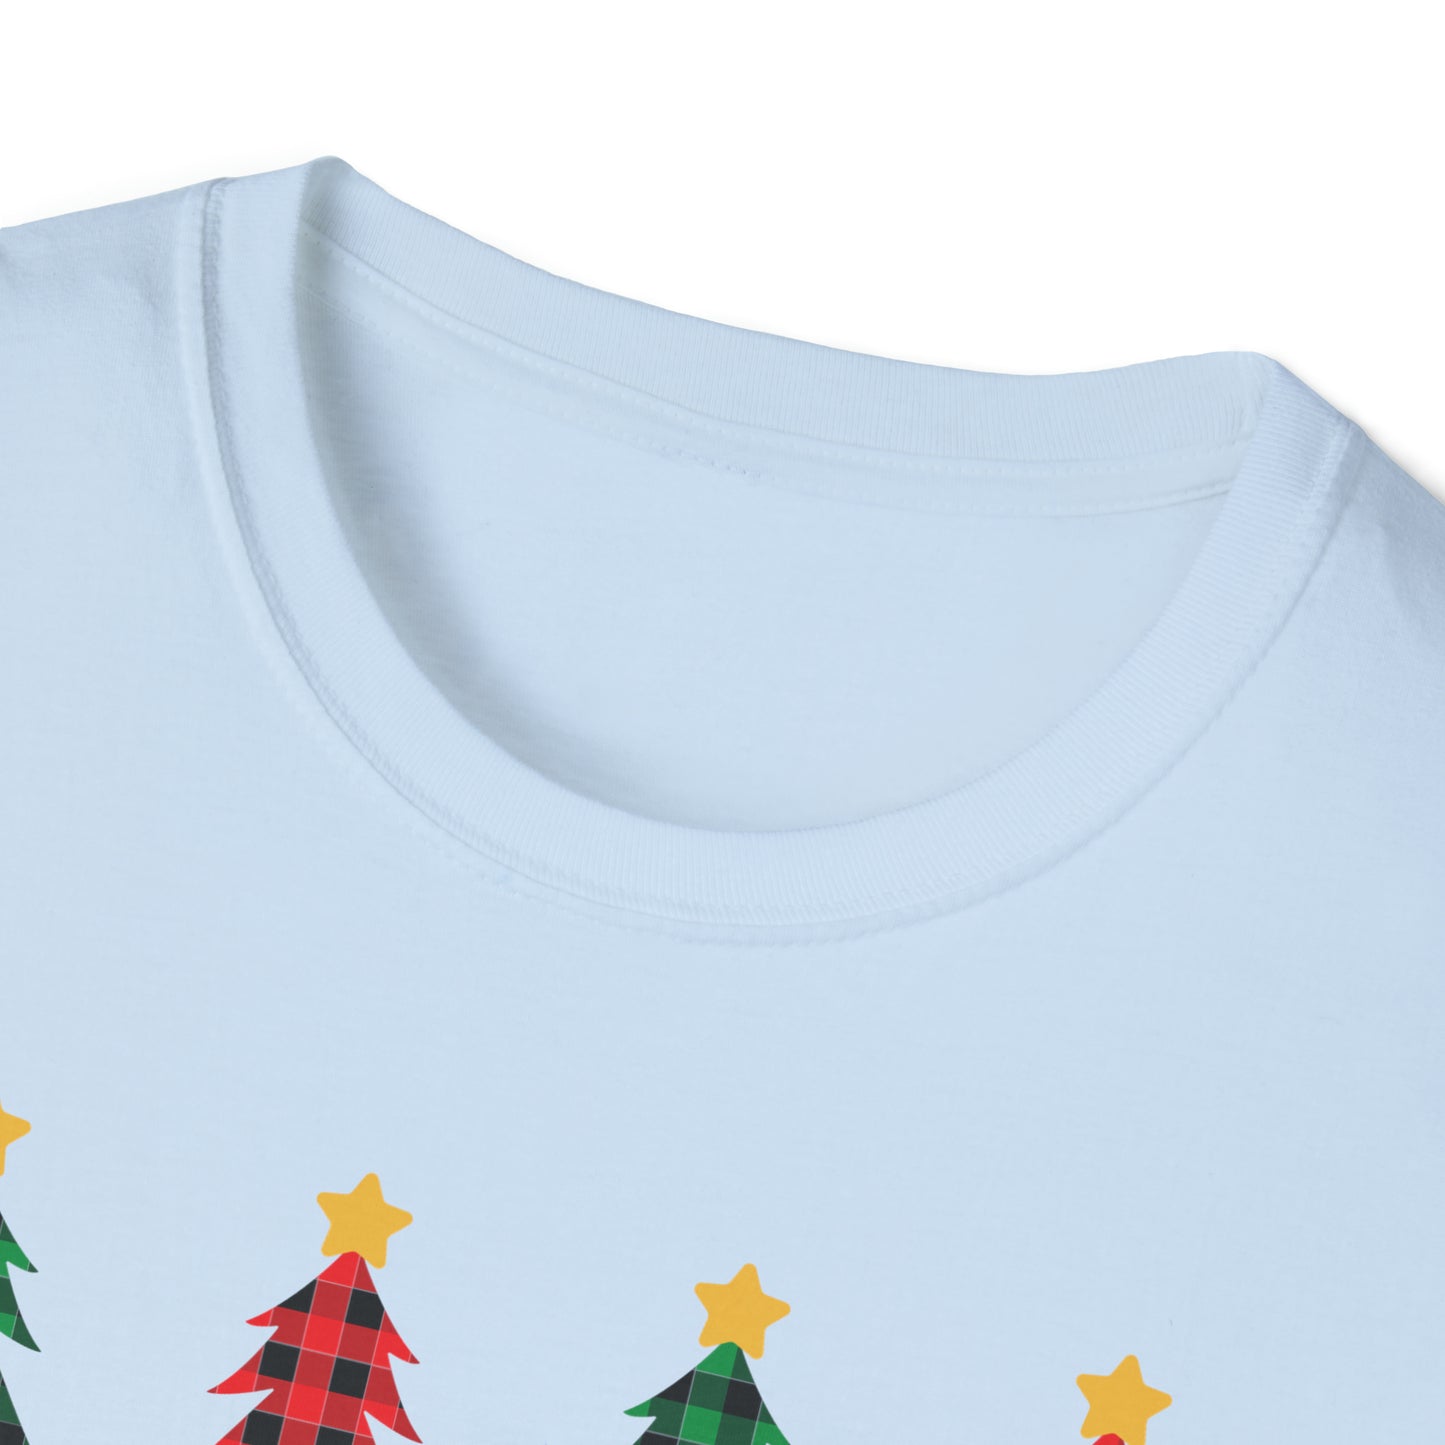 Speech Therapy Christmas Shirt Unisex